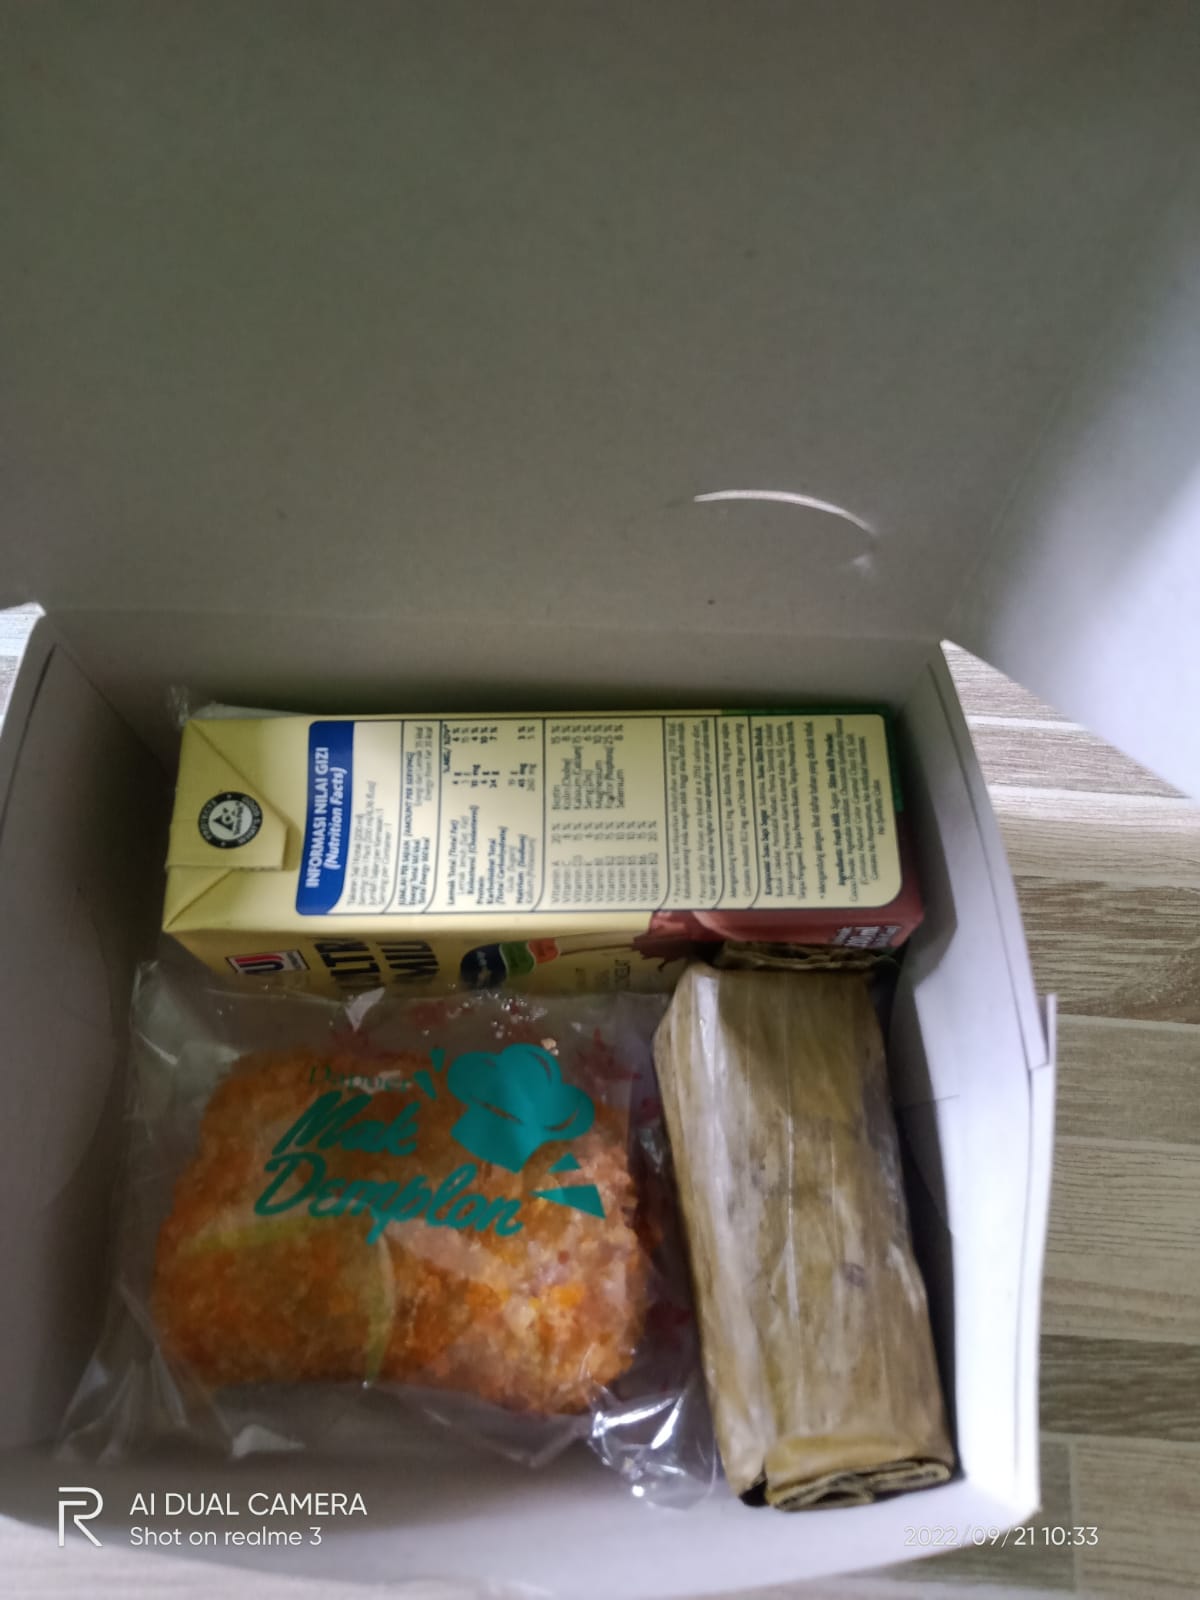 Demplon Snack Box